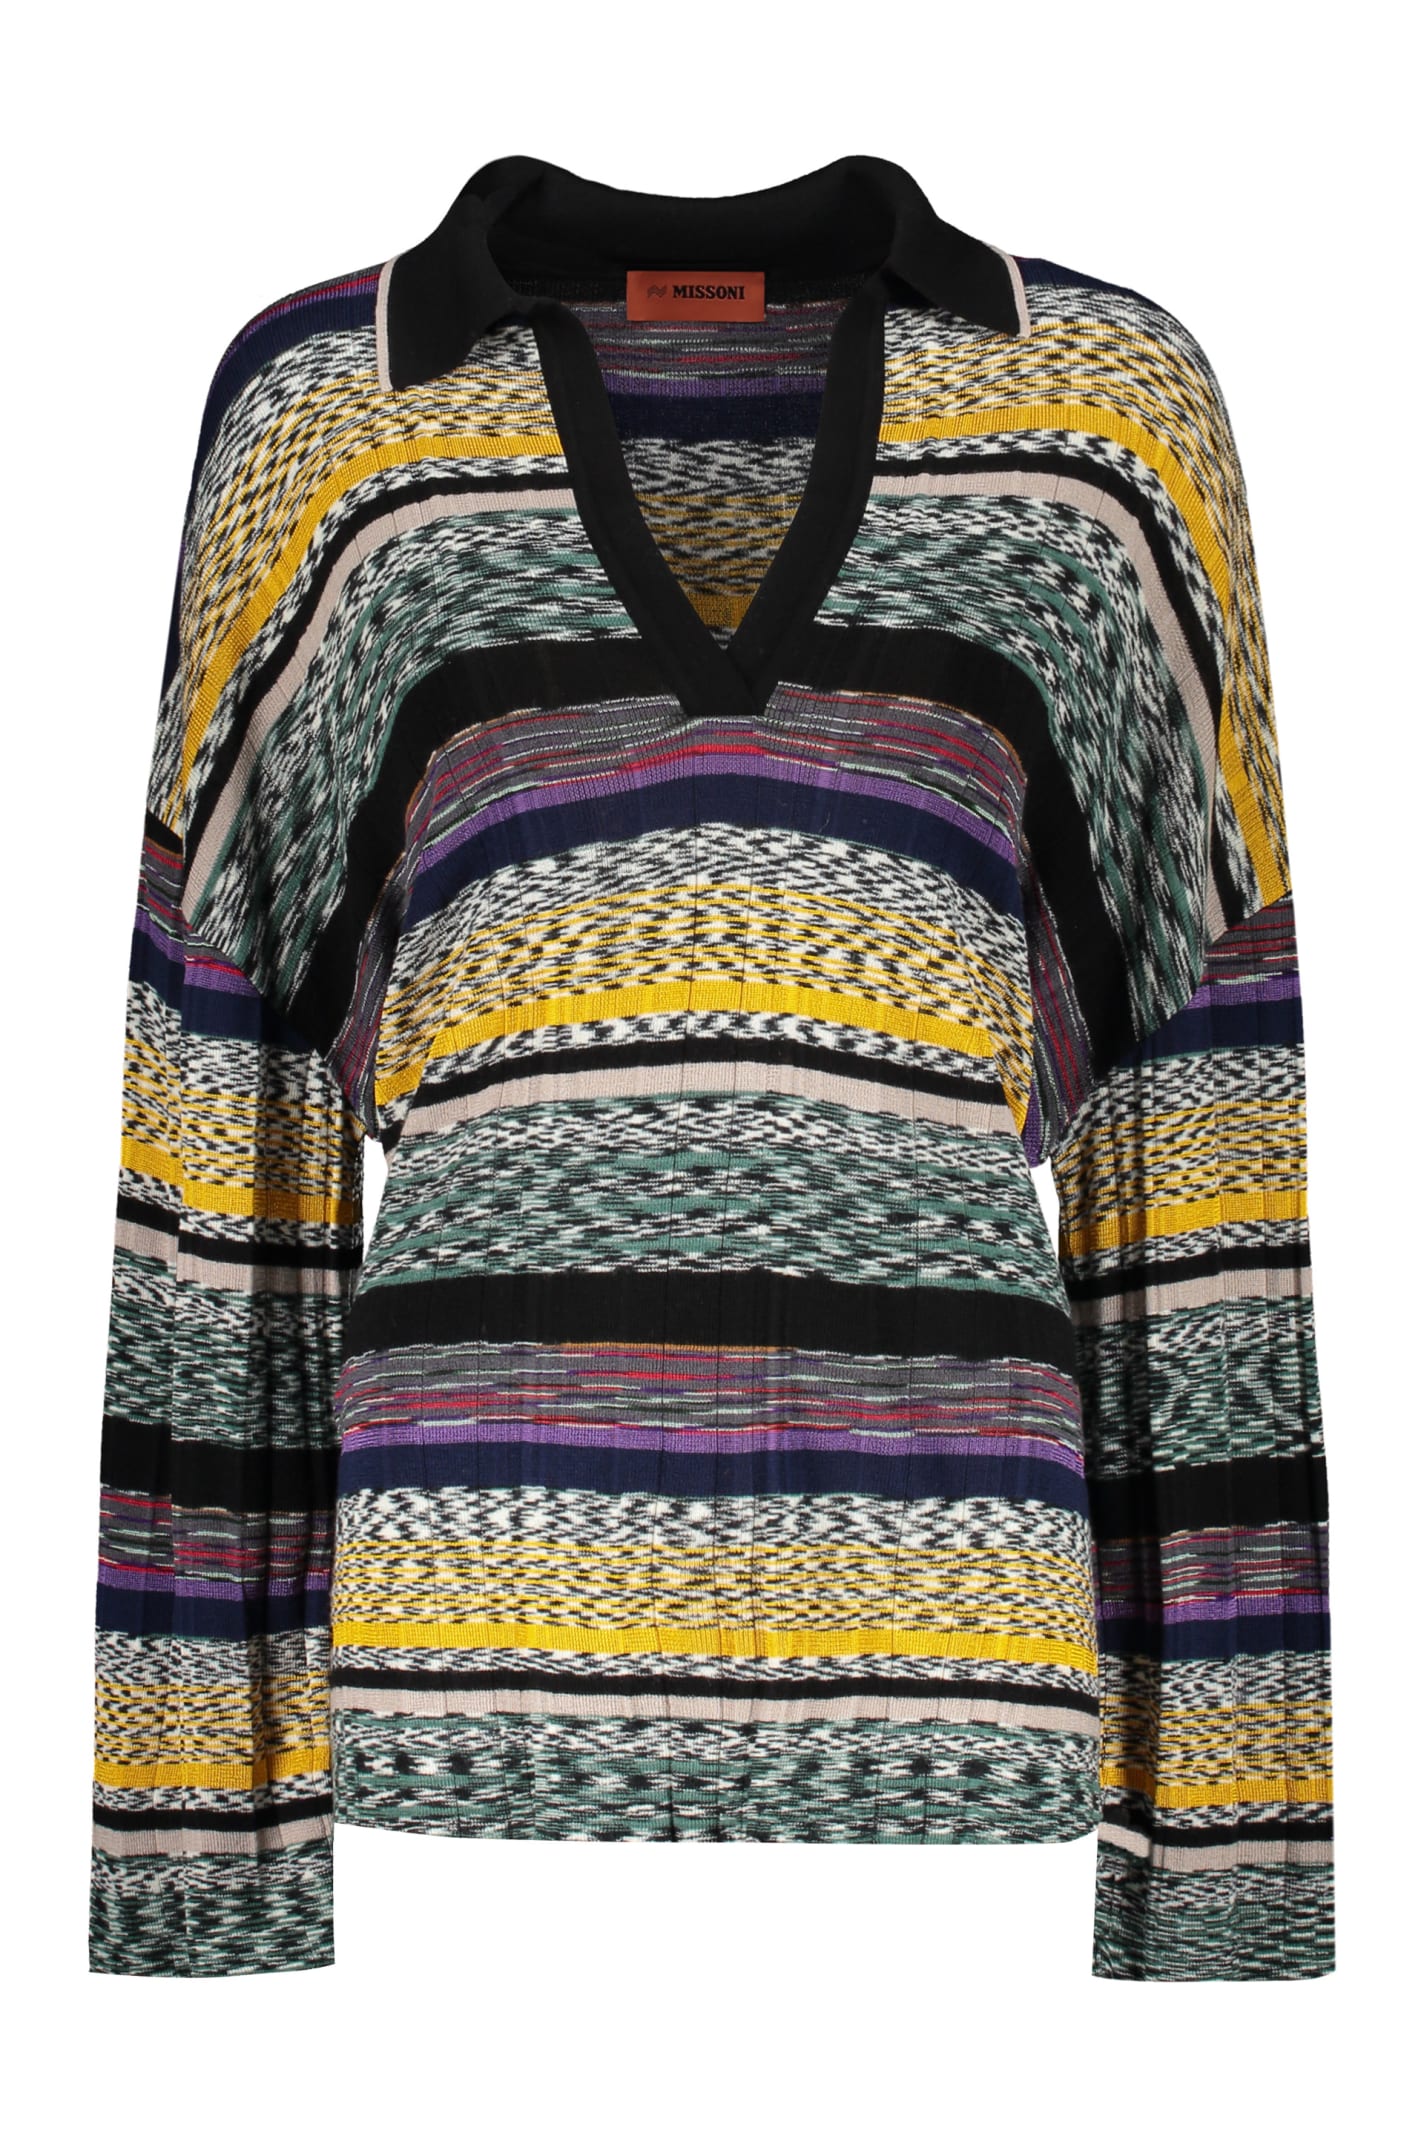 Missoni Wool Blend V-neck Sweater In Multicolor